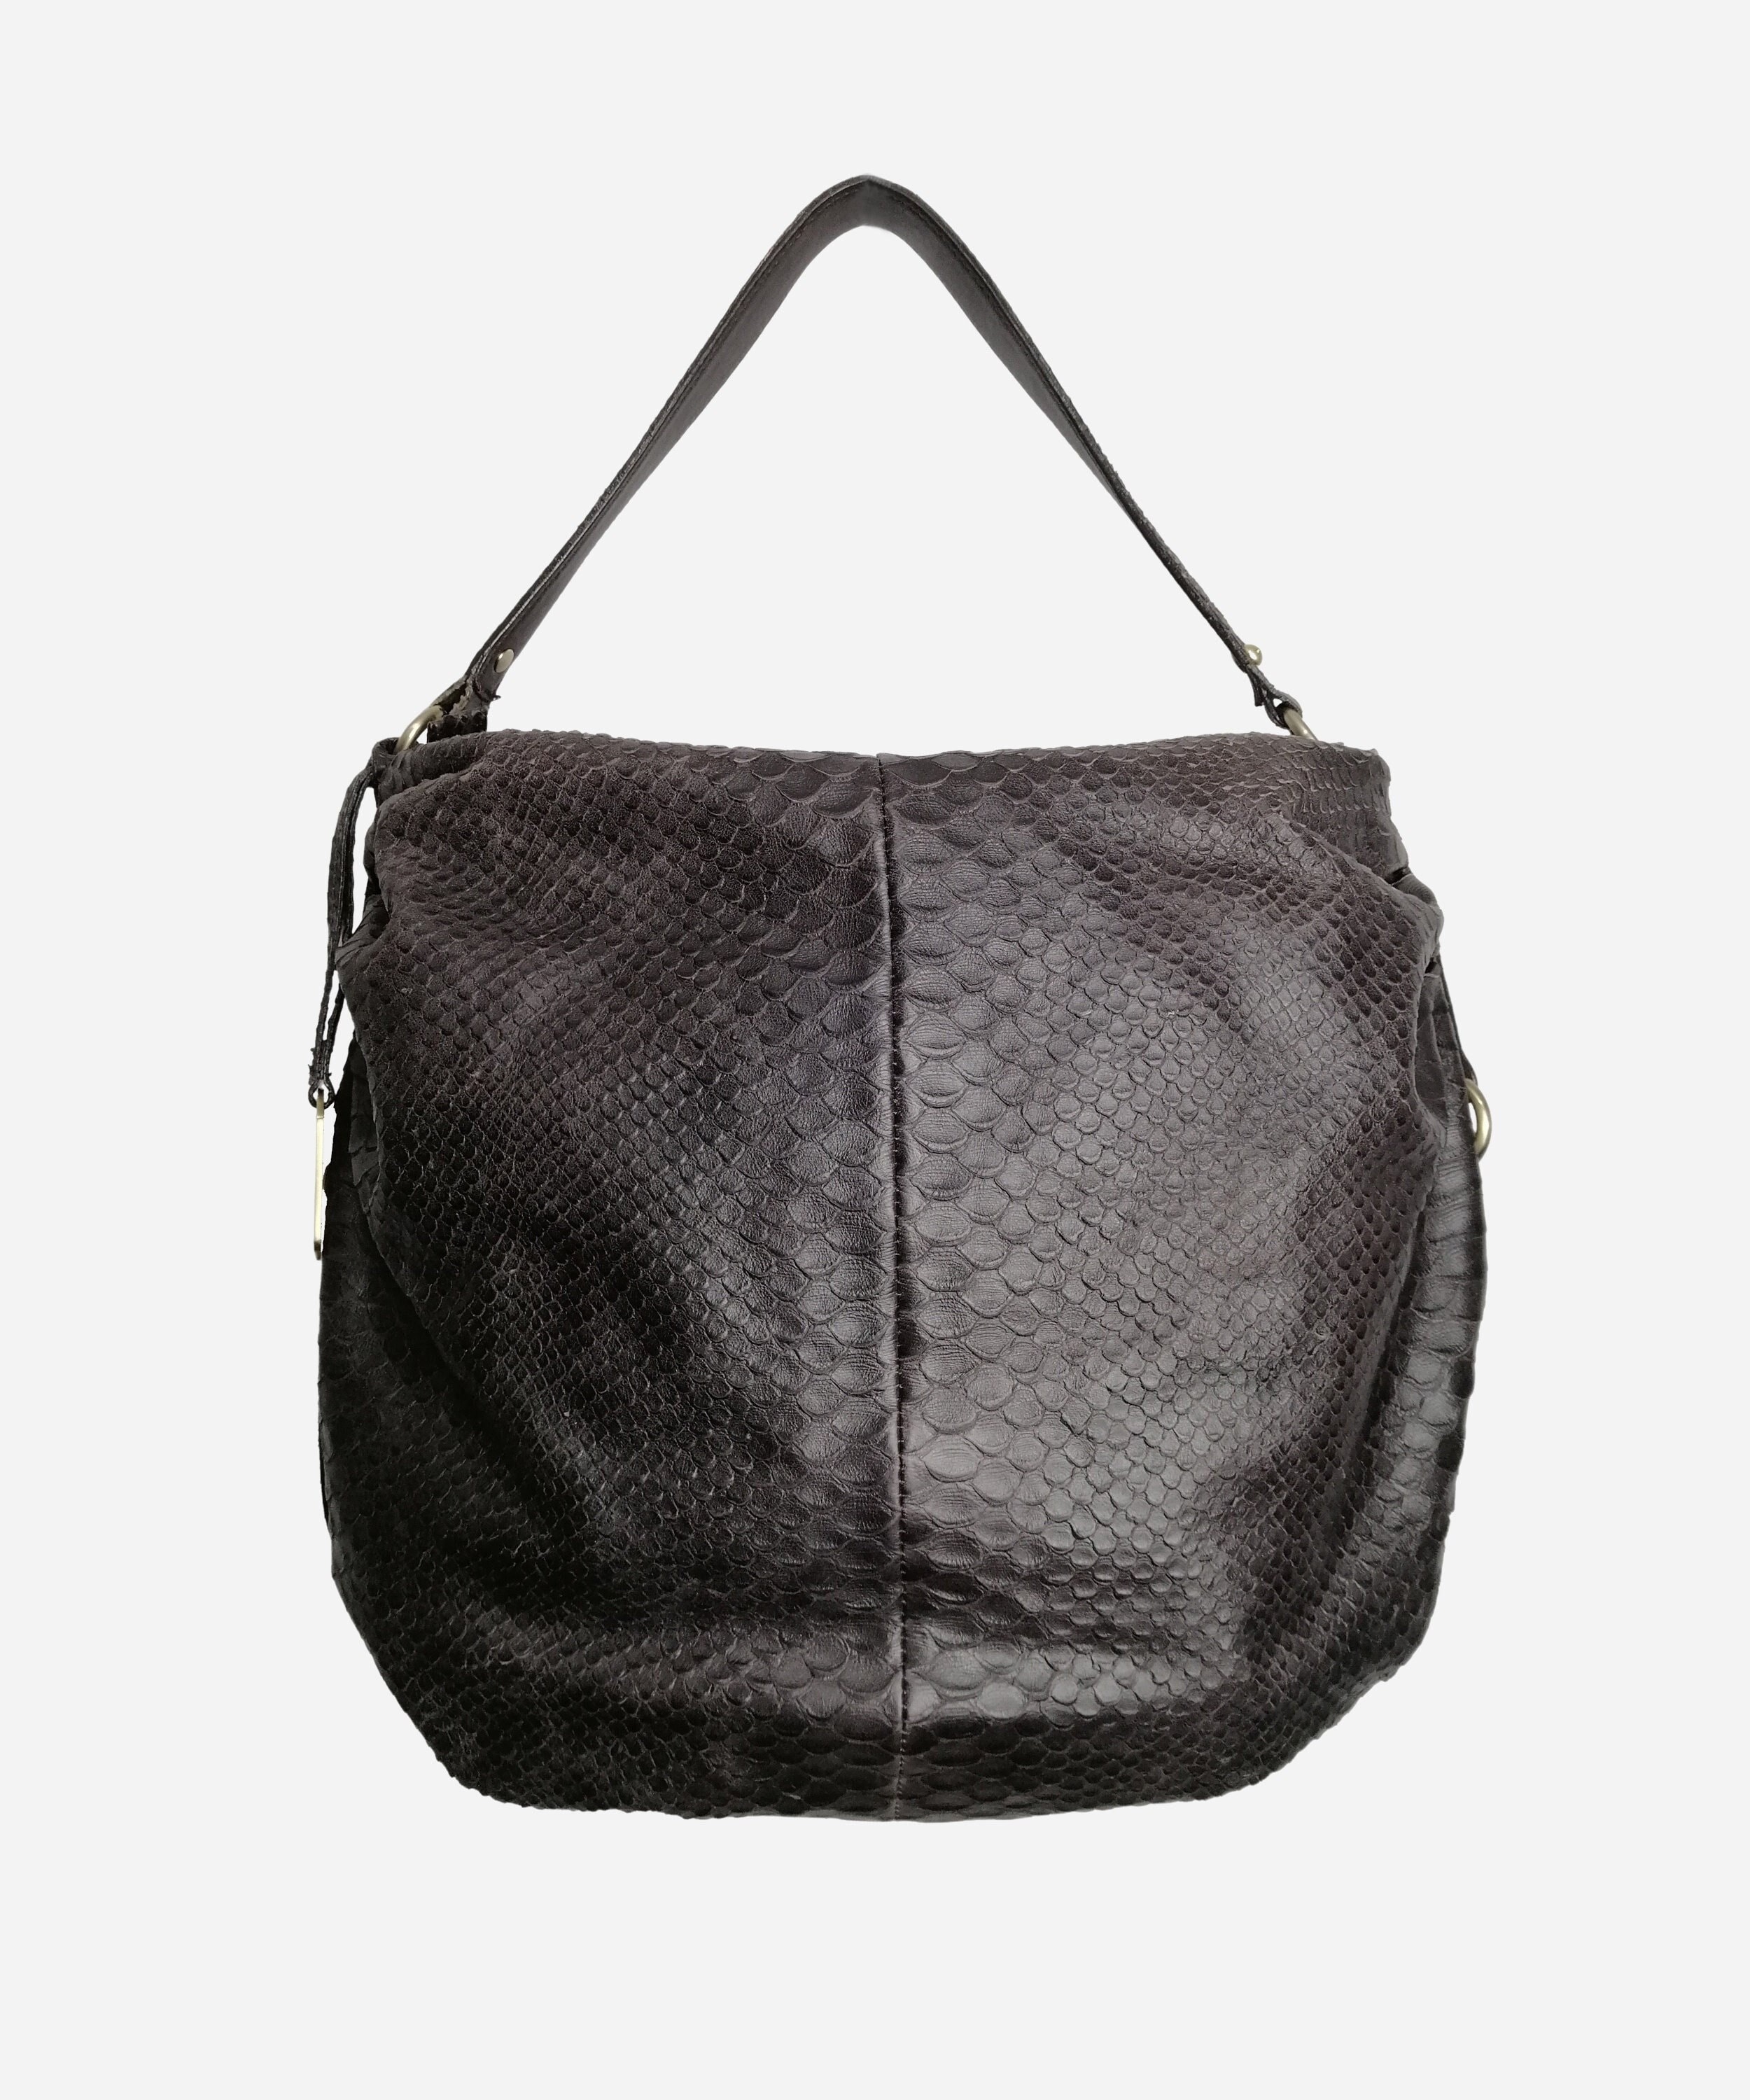 Furla Vintage Leather Hobo Bag